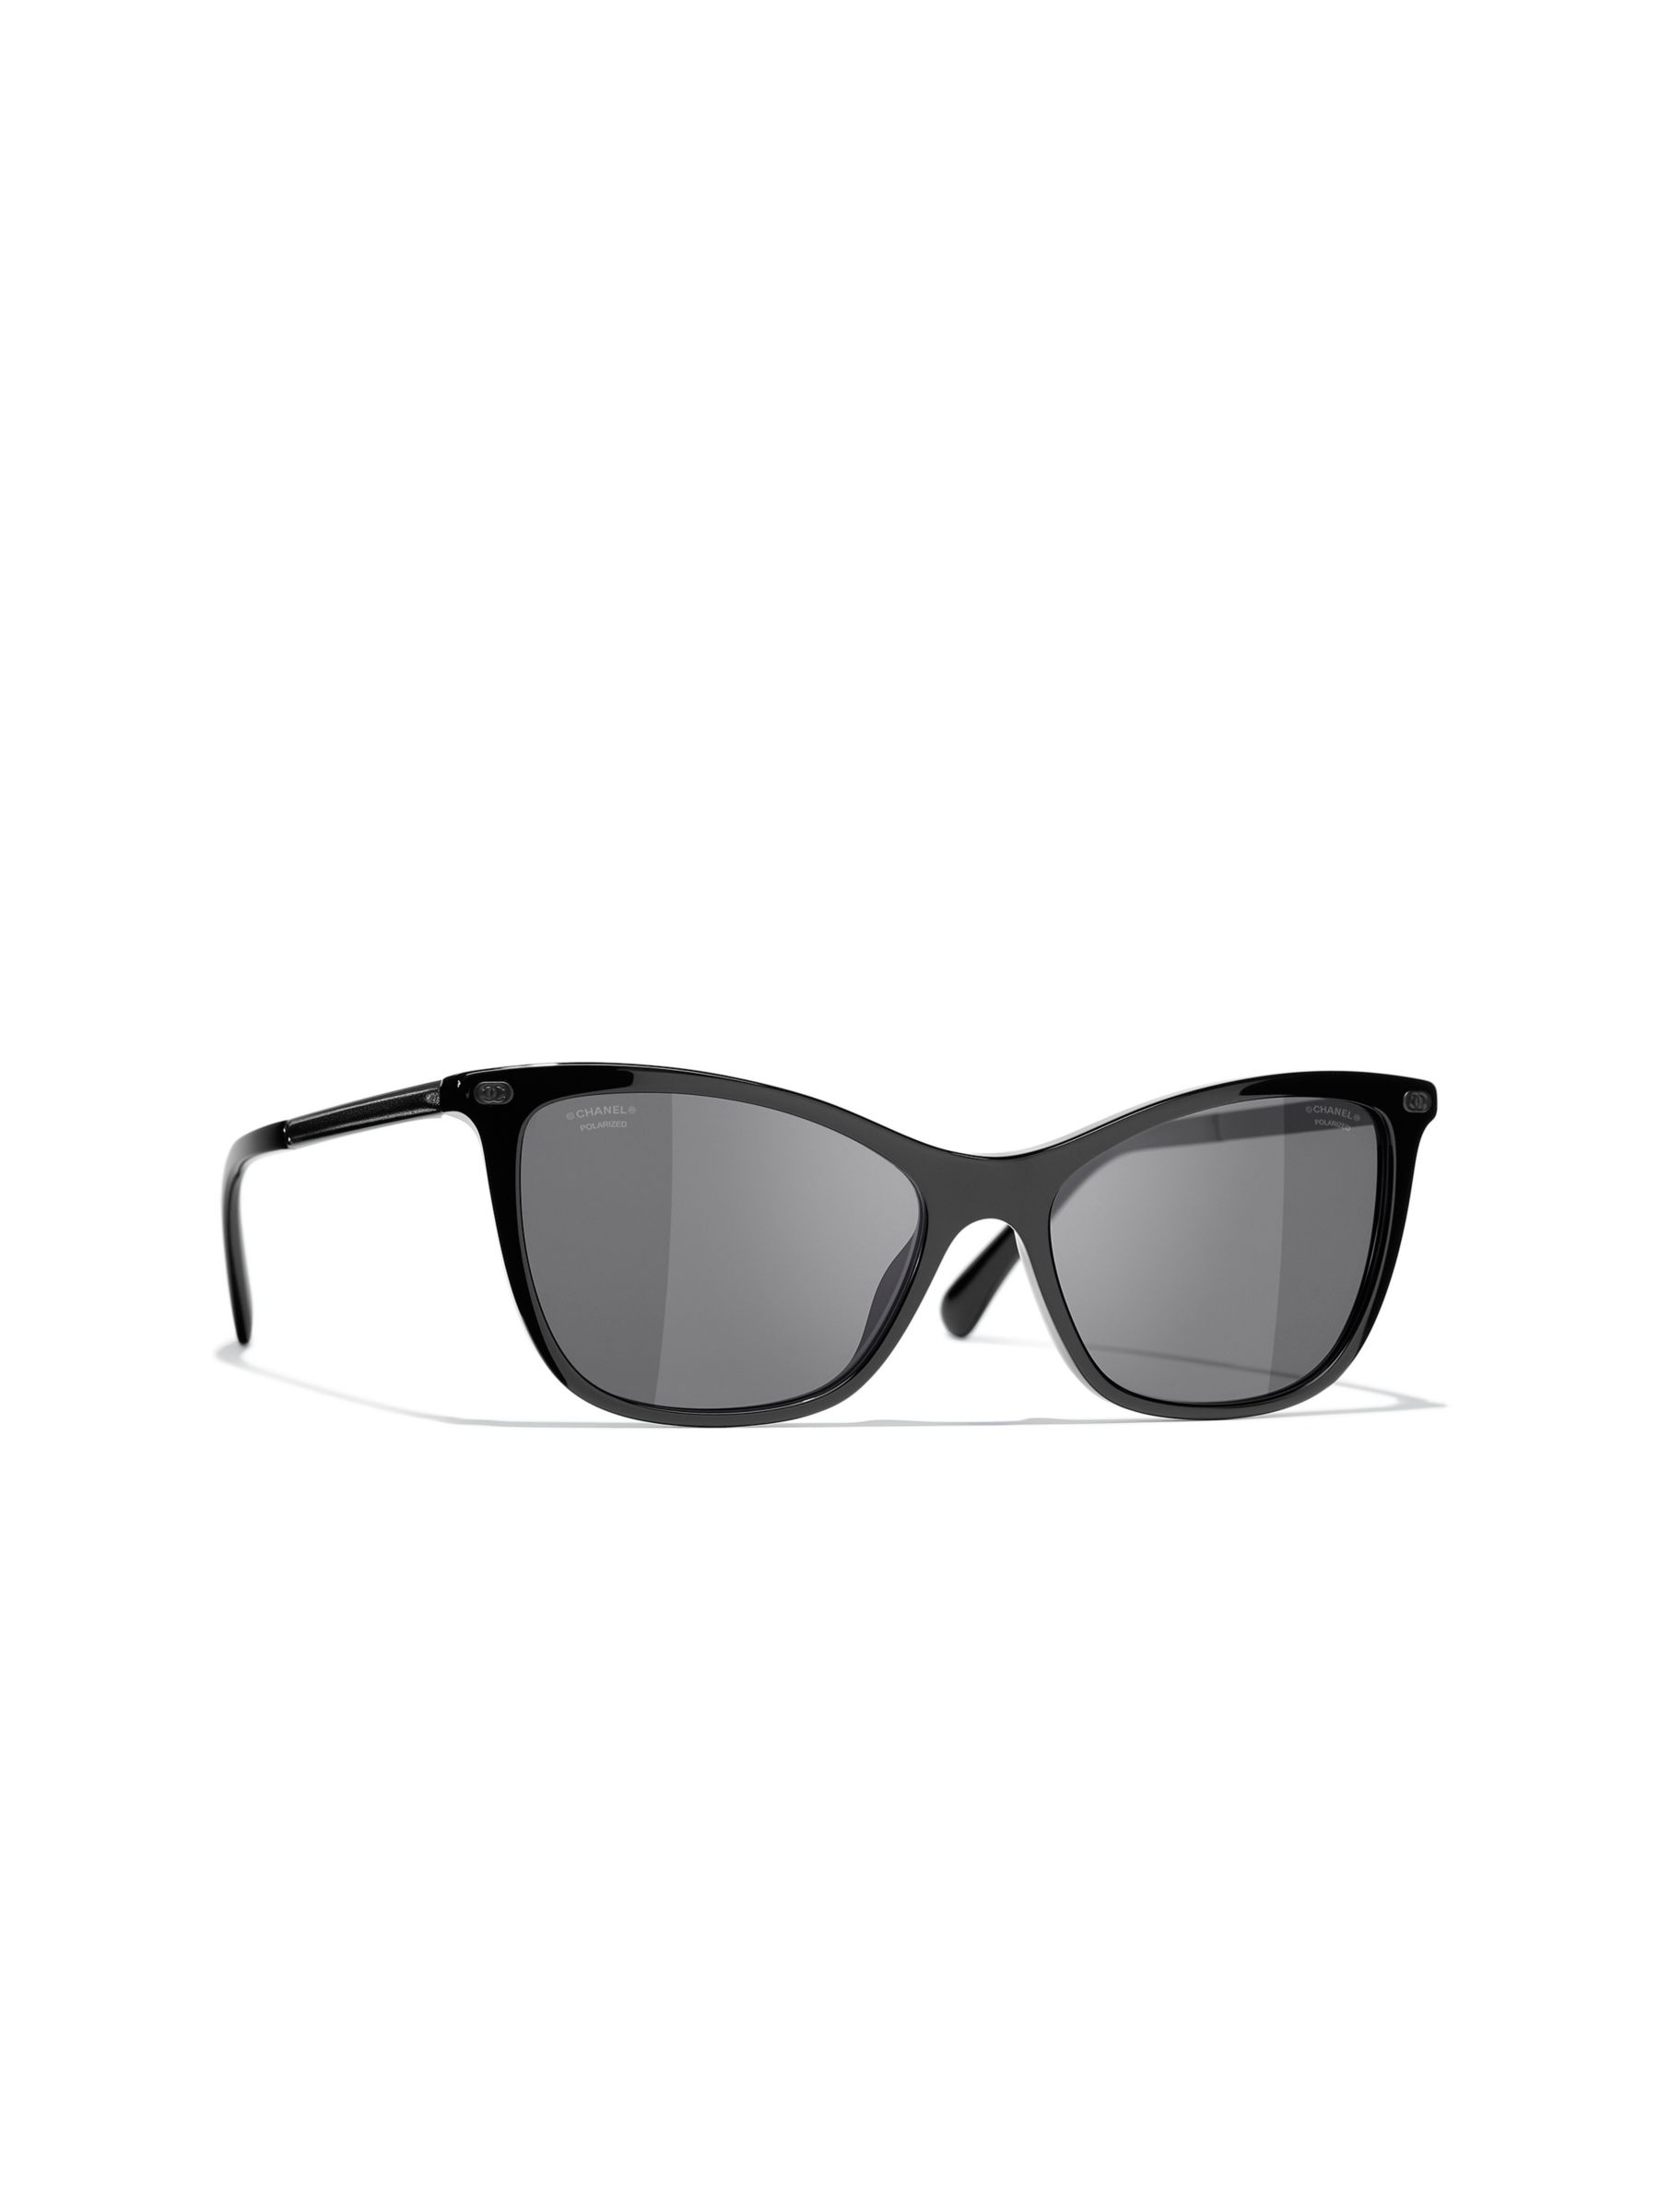 CHANEL Cat's Eye Sunglasses CH5437Q Black/Grey at John Lewis & Partners